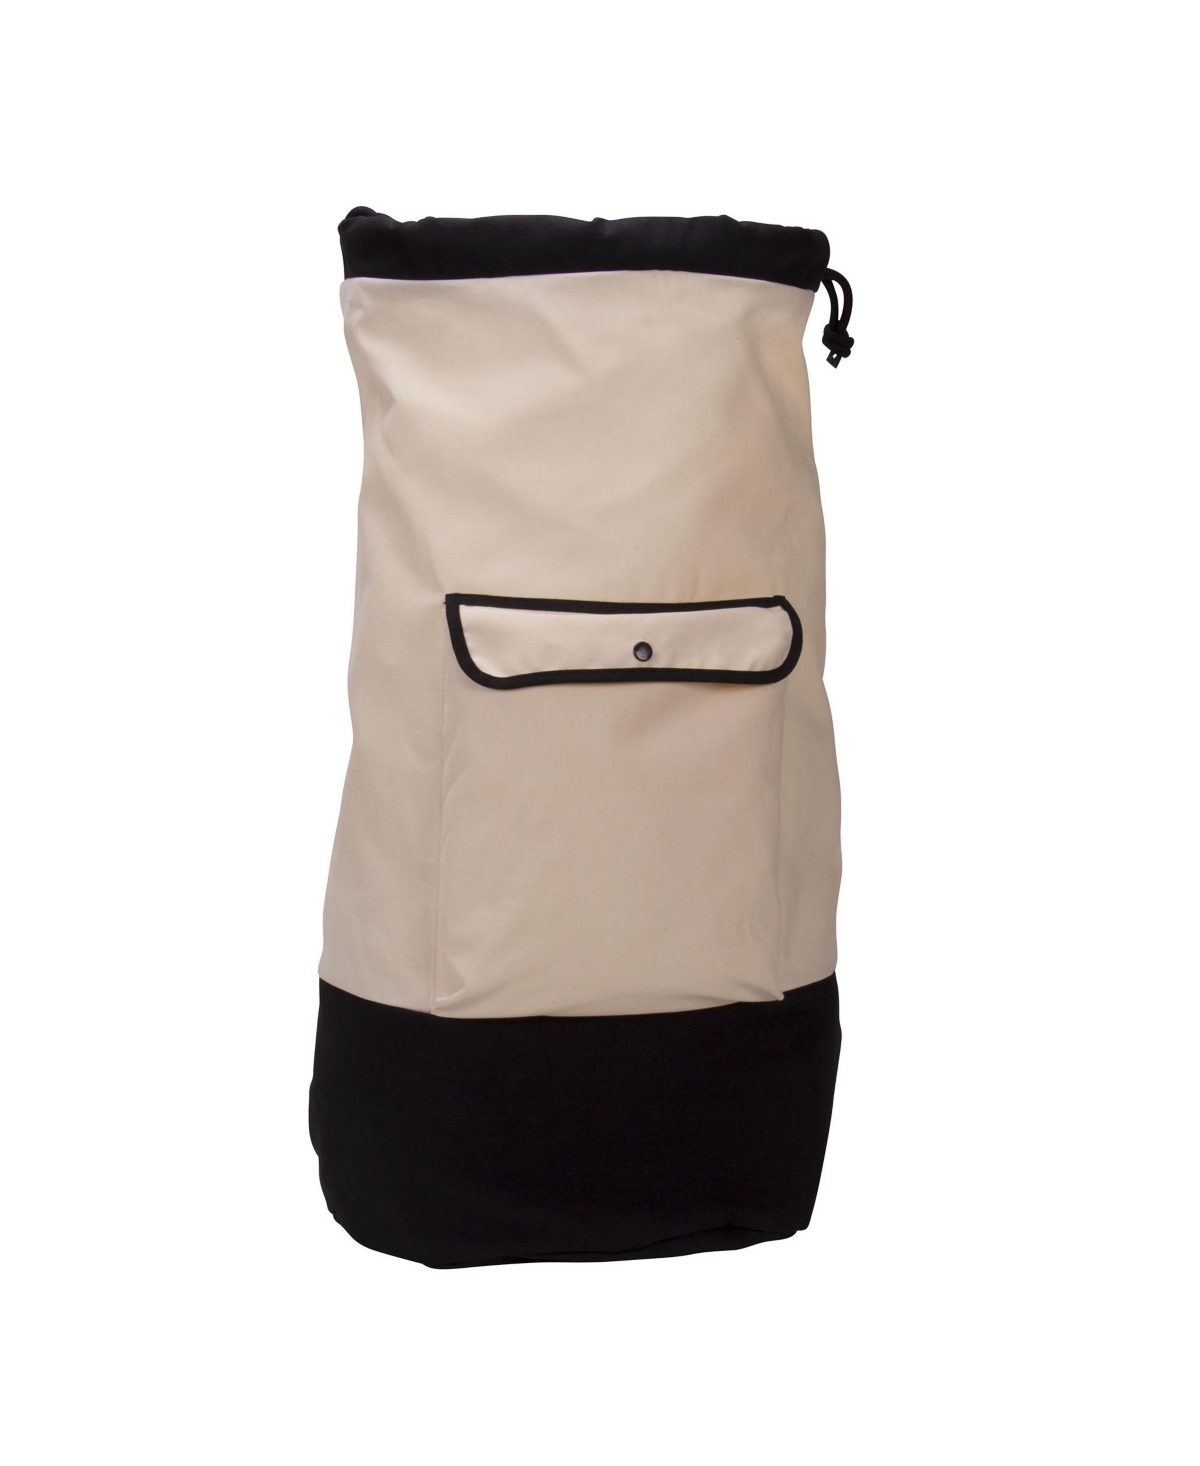 Backpack Duffel Laundry Bag